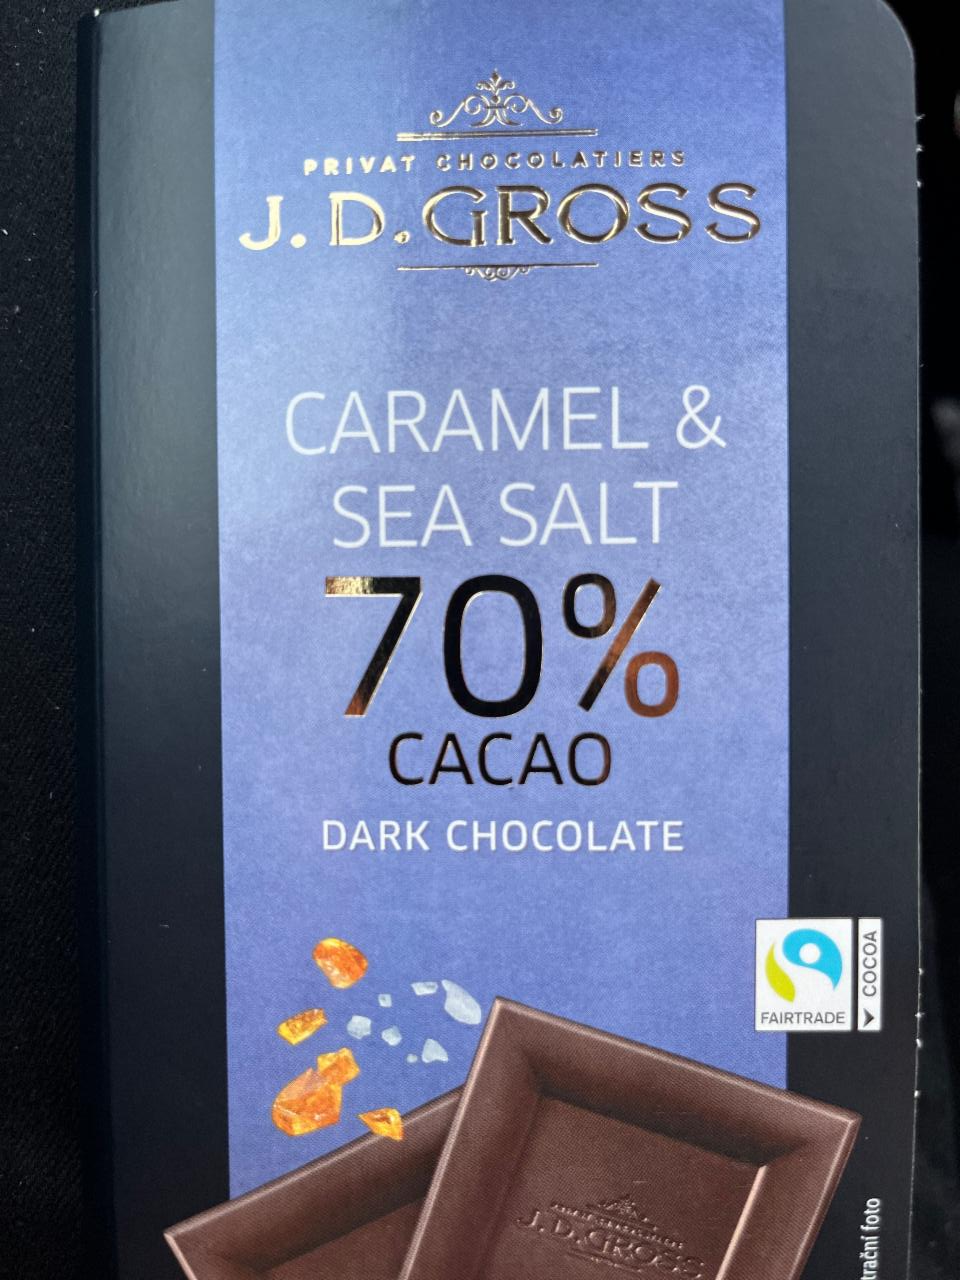 Fotografie - Dark Chocolate 70% cacao Caramel & Sea Salt J. D. Gross